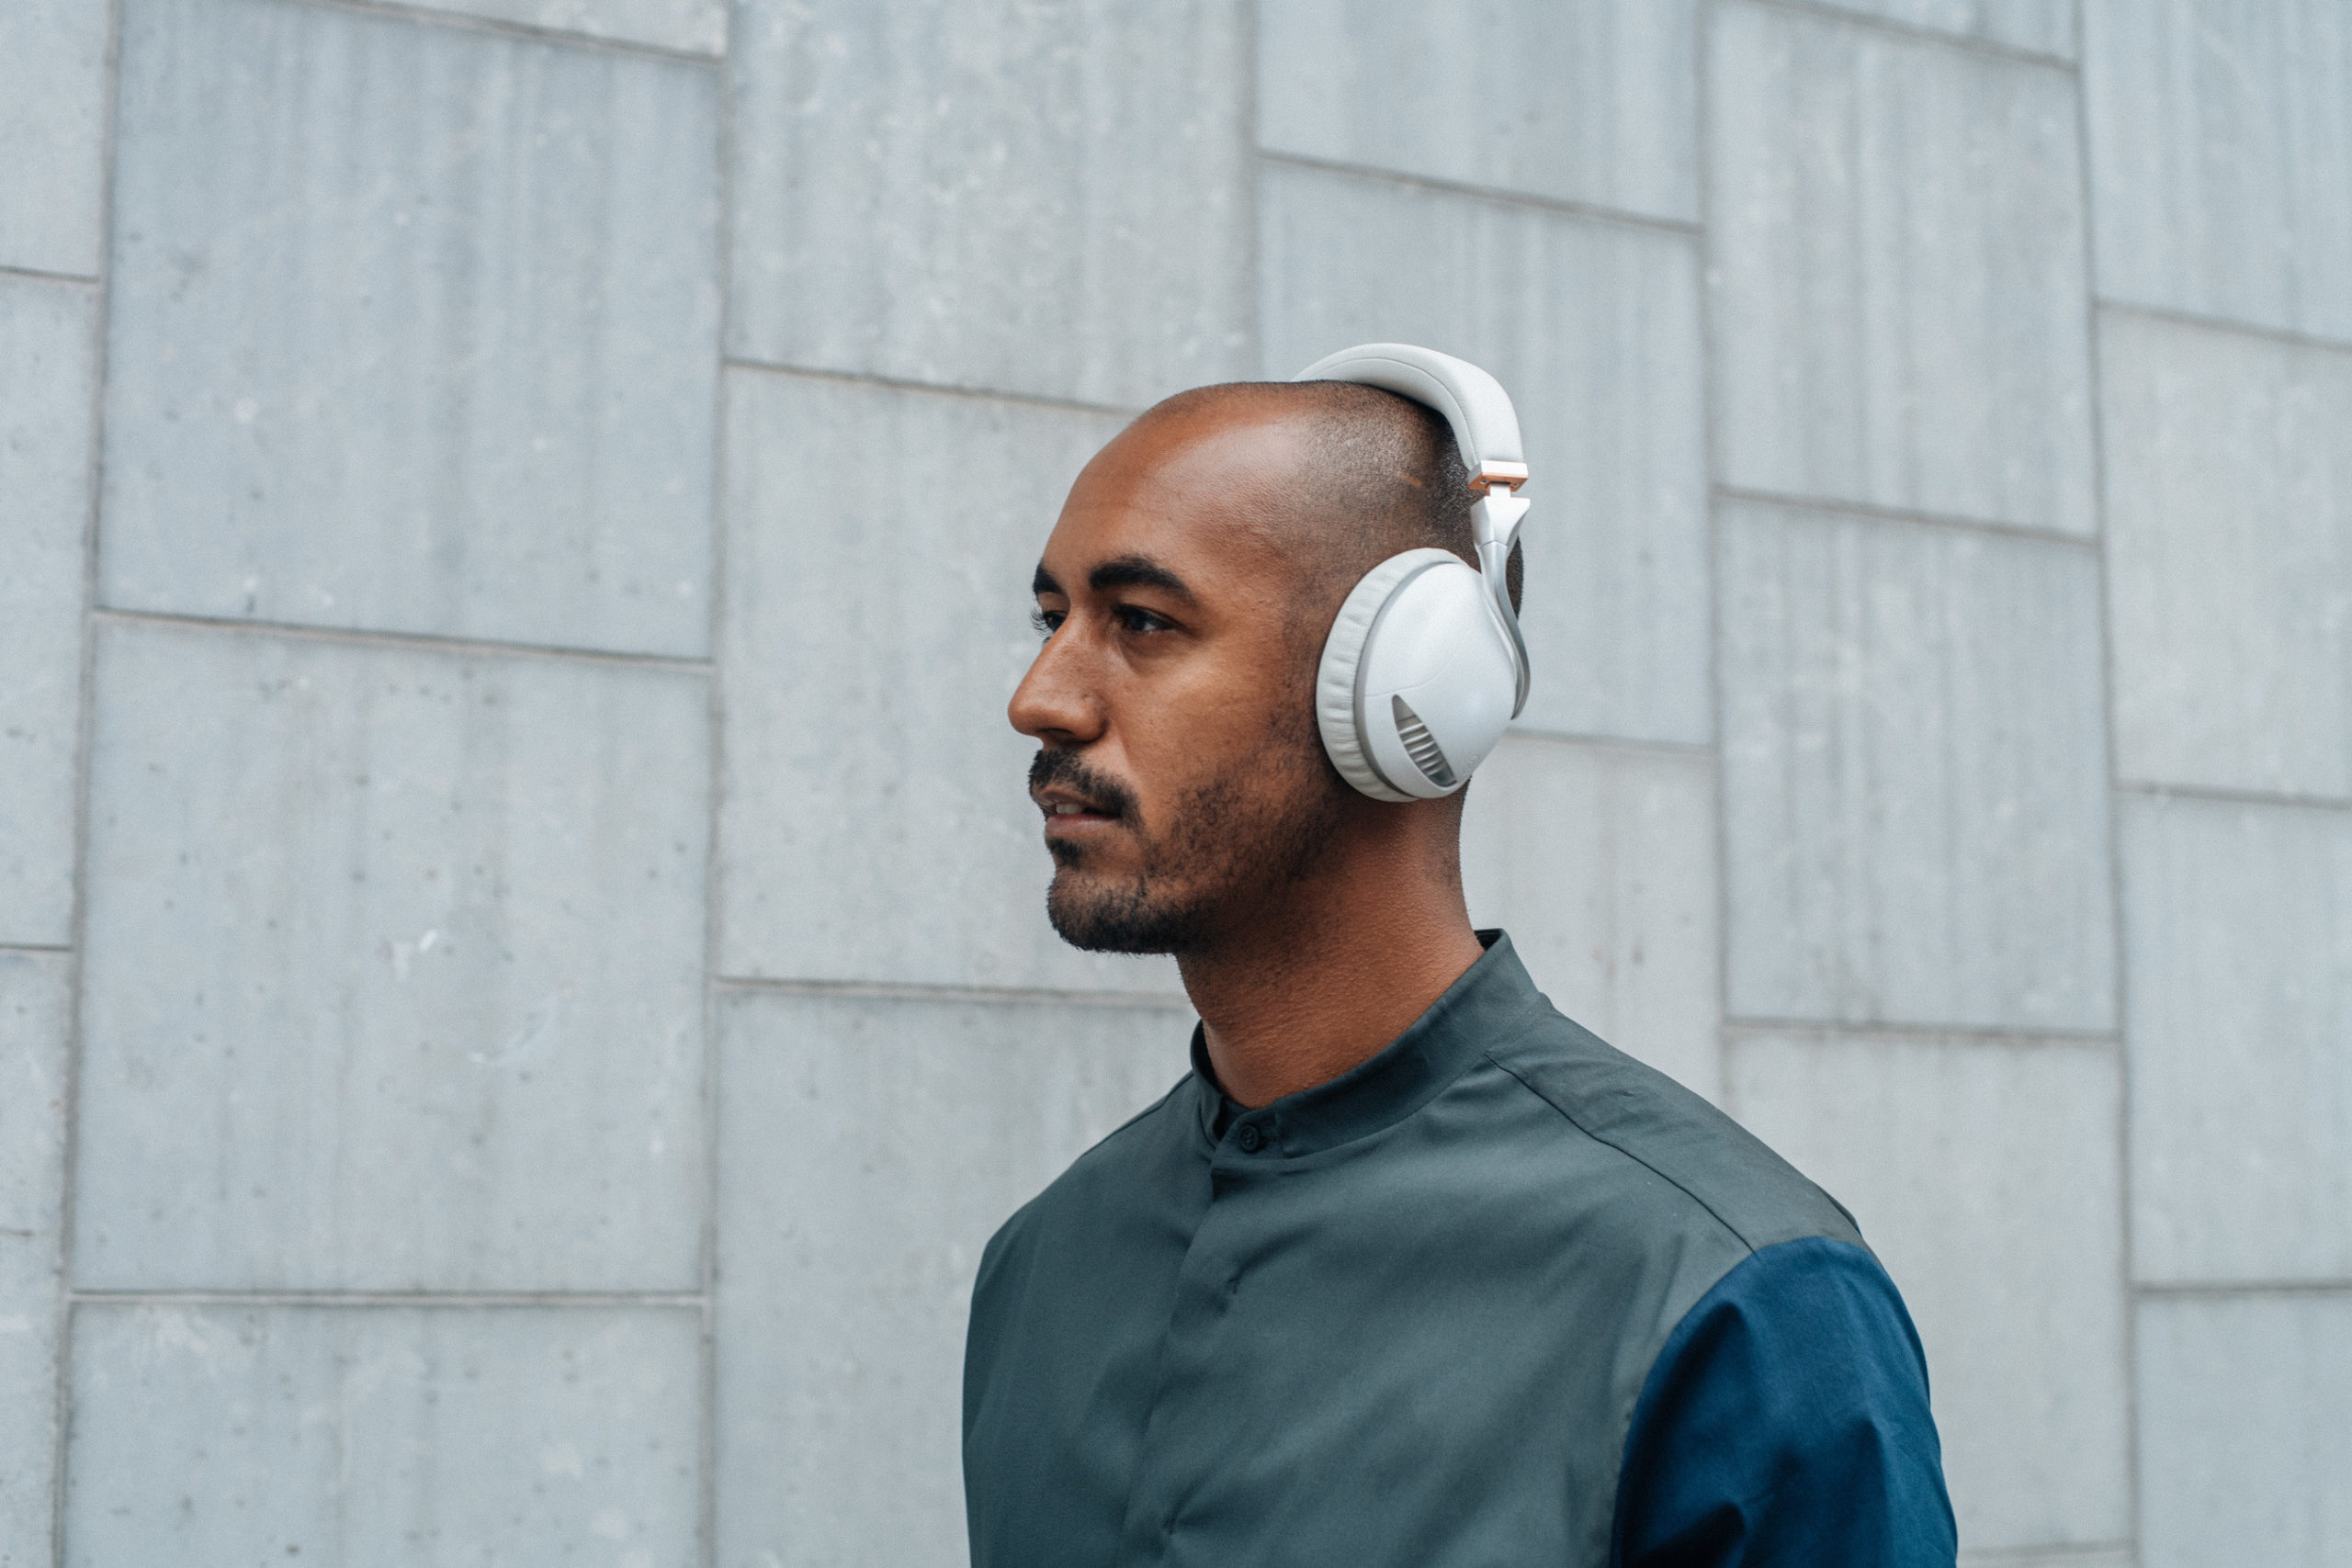 Revolutionary Audio Technology Company IRIS Launches Highly Anticipated Headphones